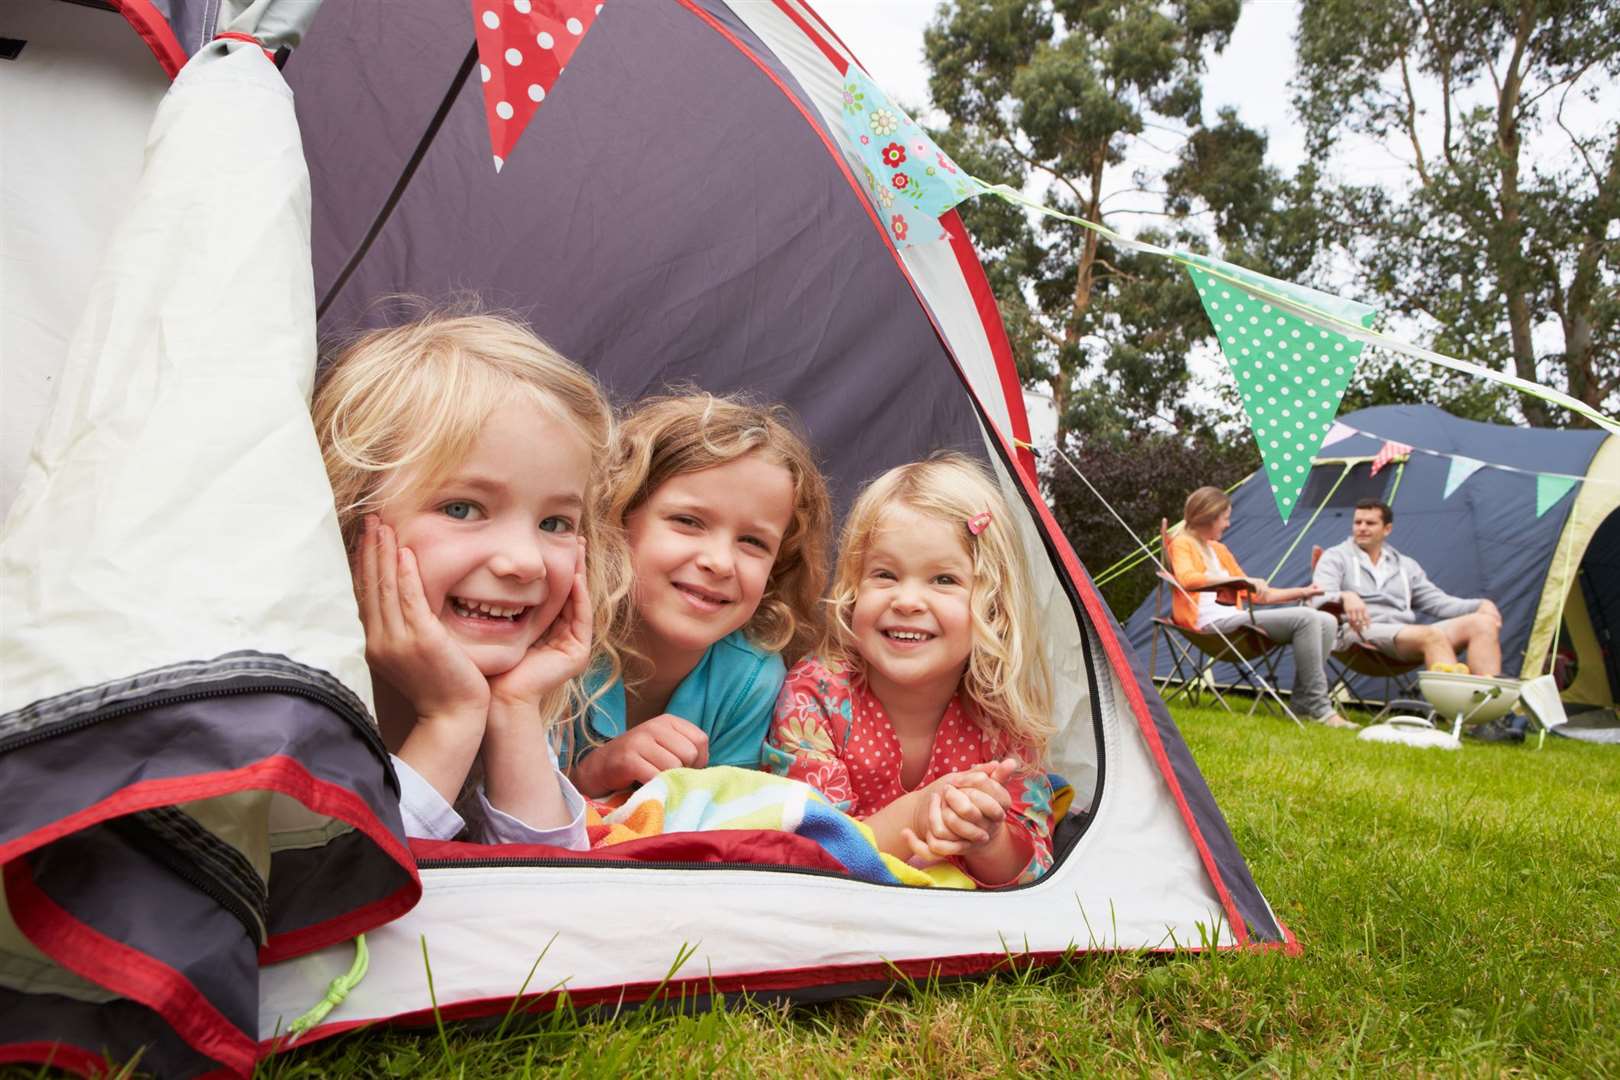 Tent sales soared as UK-based breaks became more popular